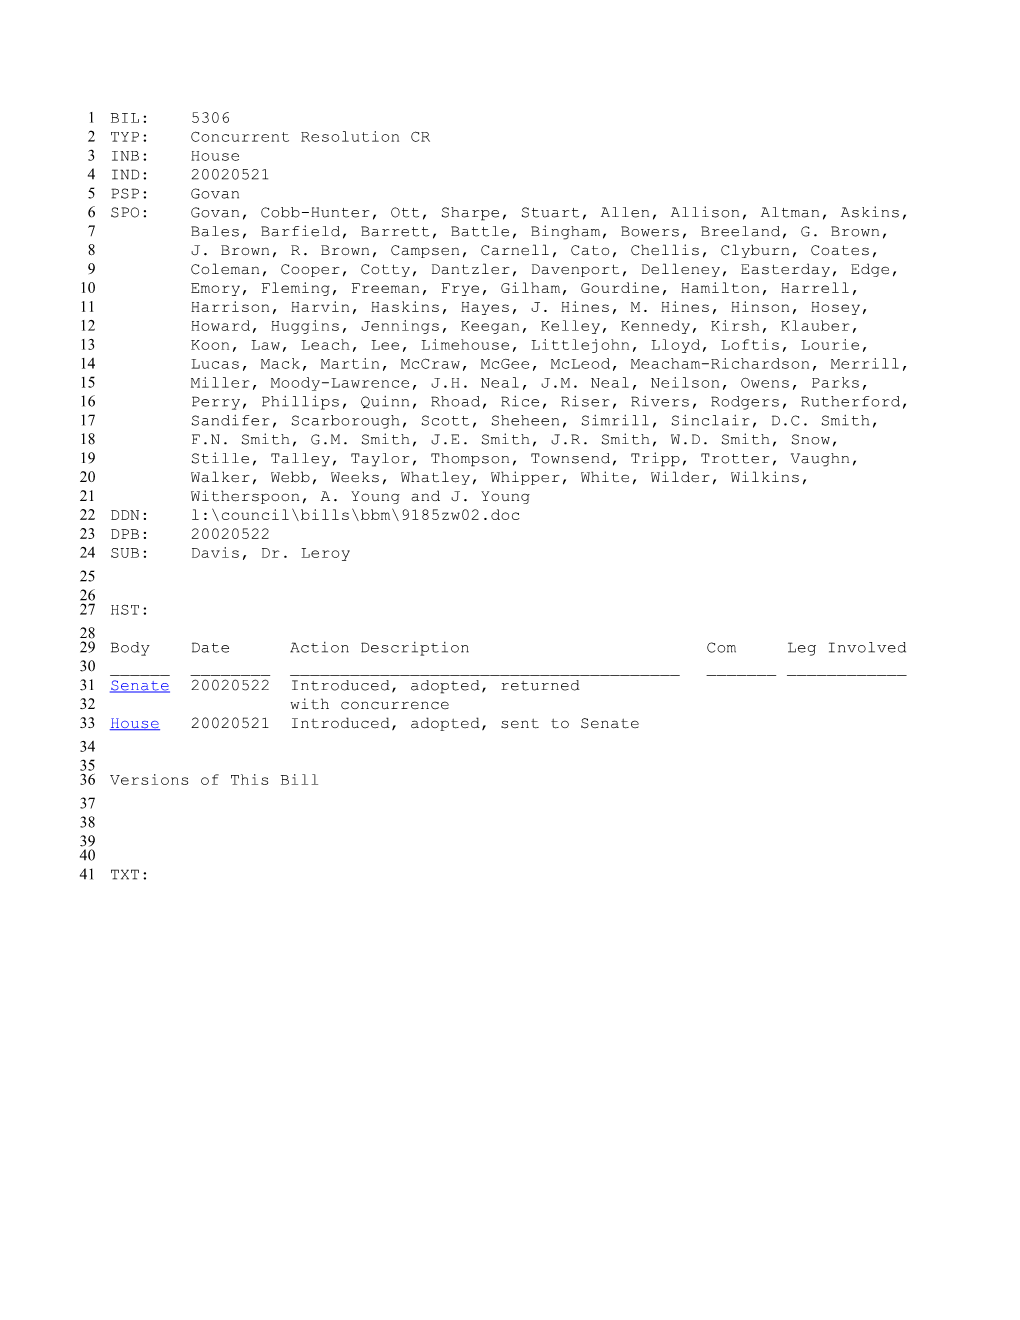 2001-2002 Bill 5306: Davis, Dr. Leroy - South Carolina Legislature Online